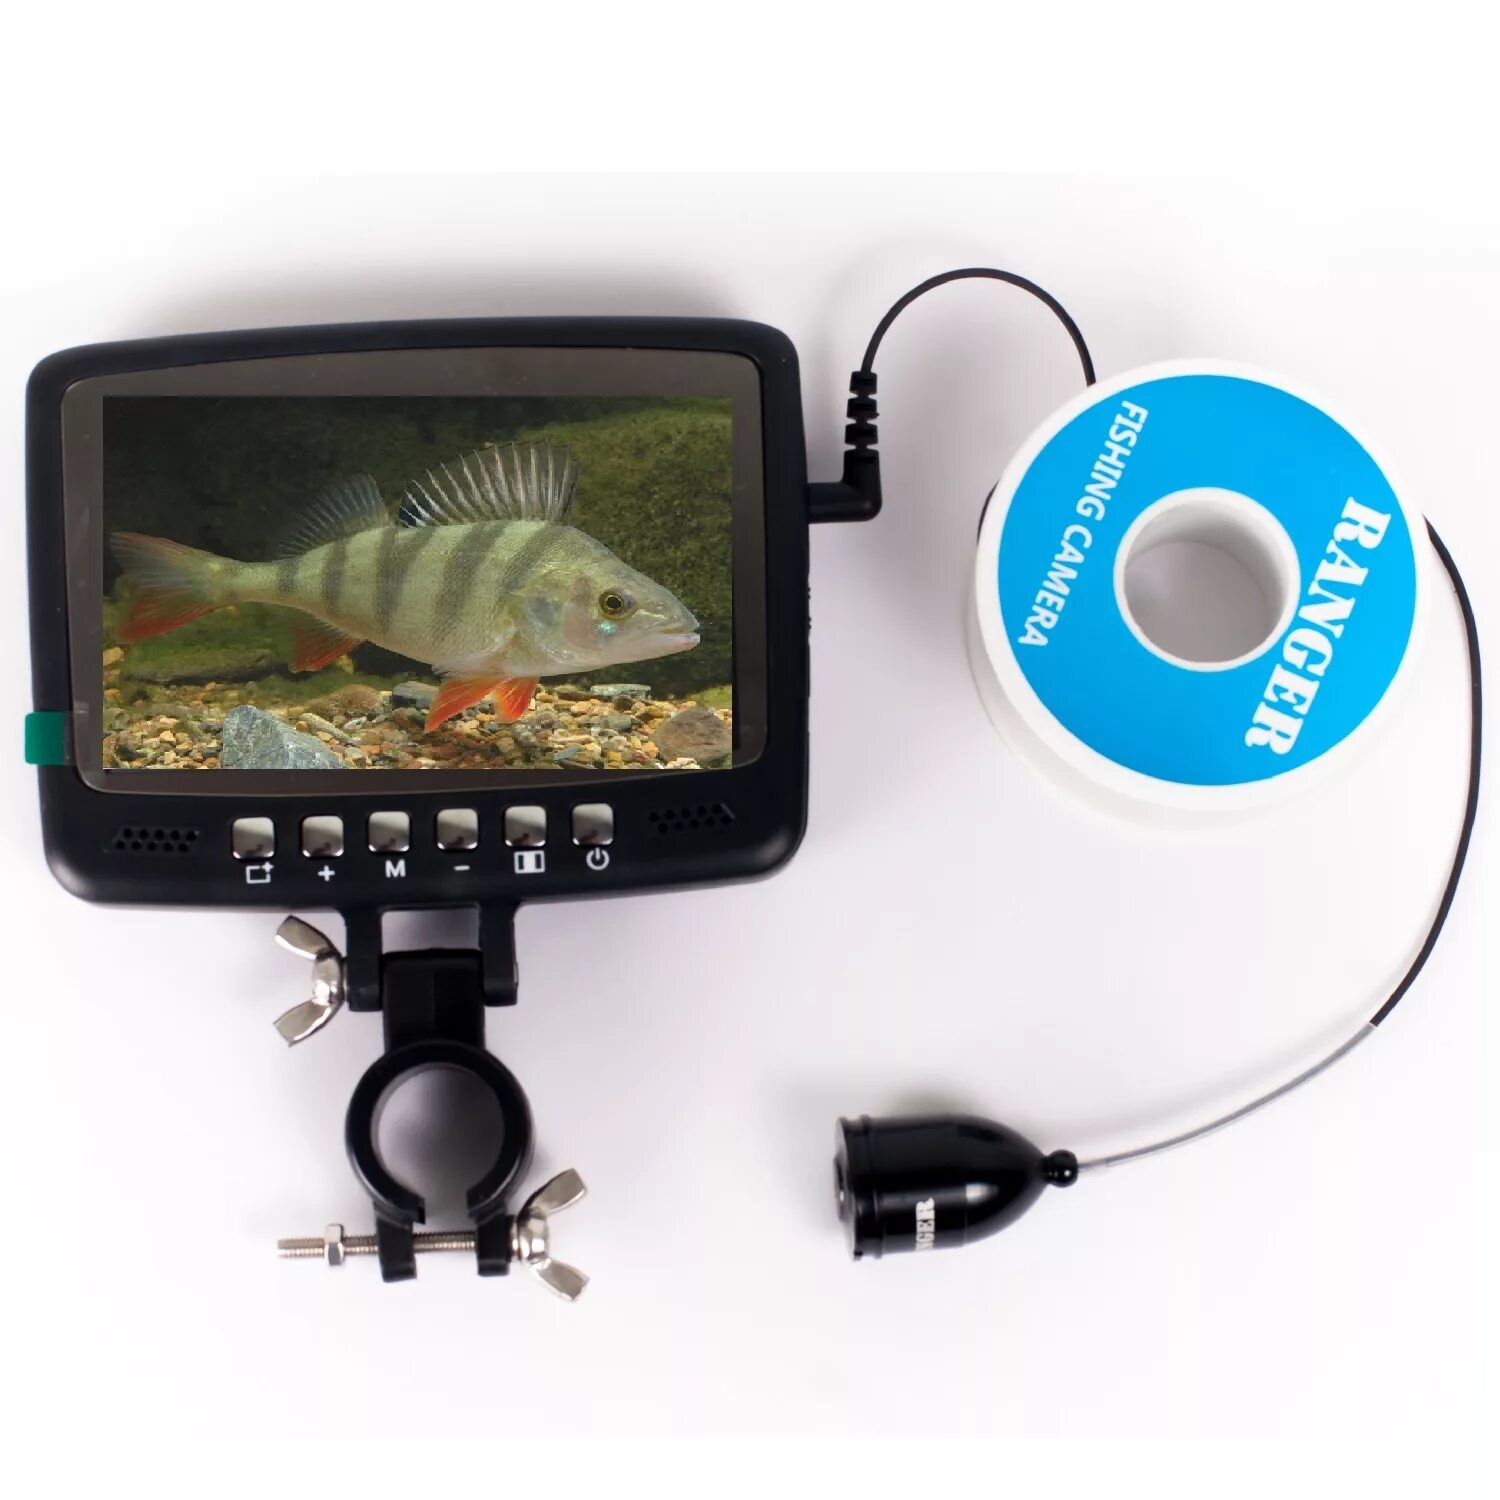 Подводная камера Ranger Lux 15. Камера Ranger Lux 20 для рыбалки. Подводную камеру для зимней рыбалки Ranger. Аксессуары для подводной камеры для рыбалки. Камера для рыбалки для смартфона